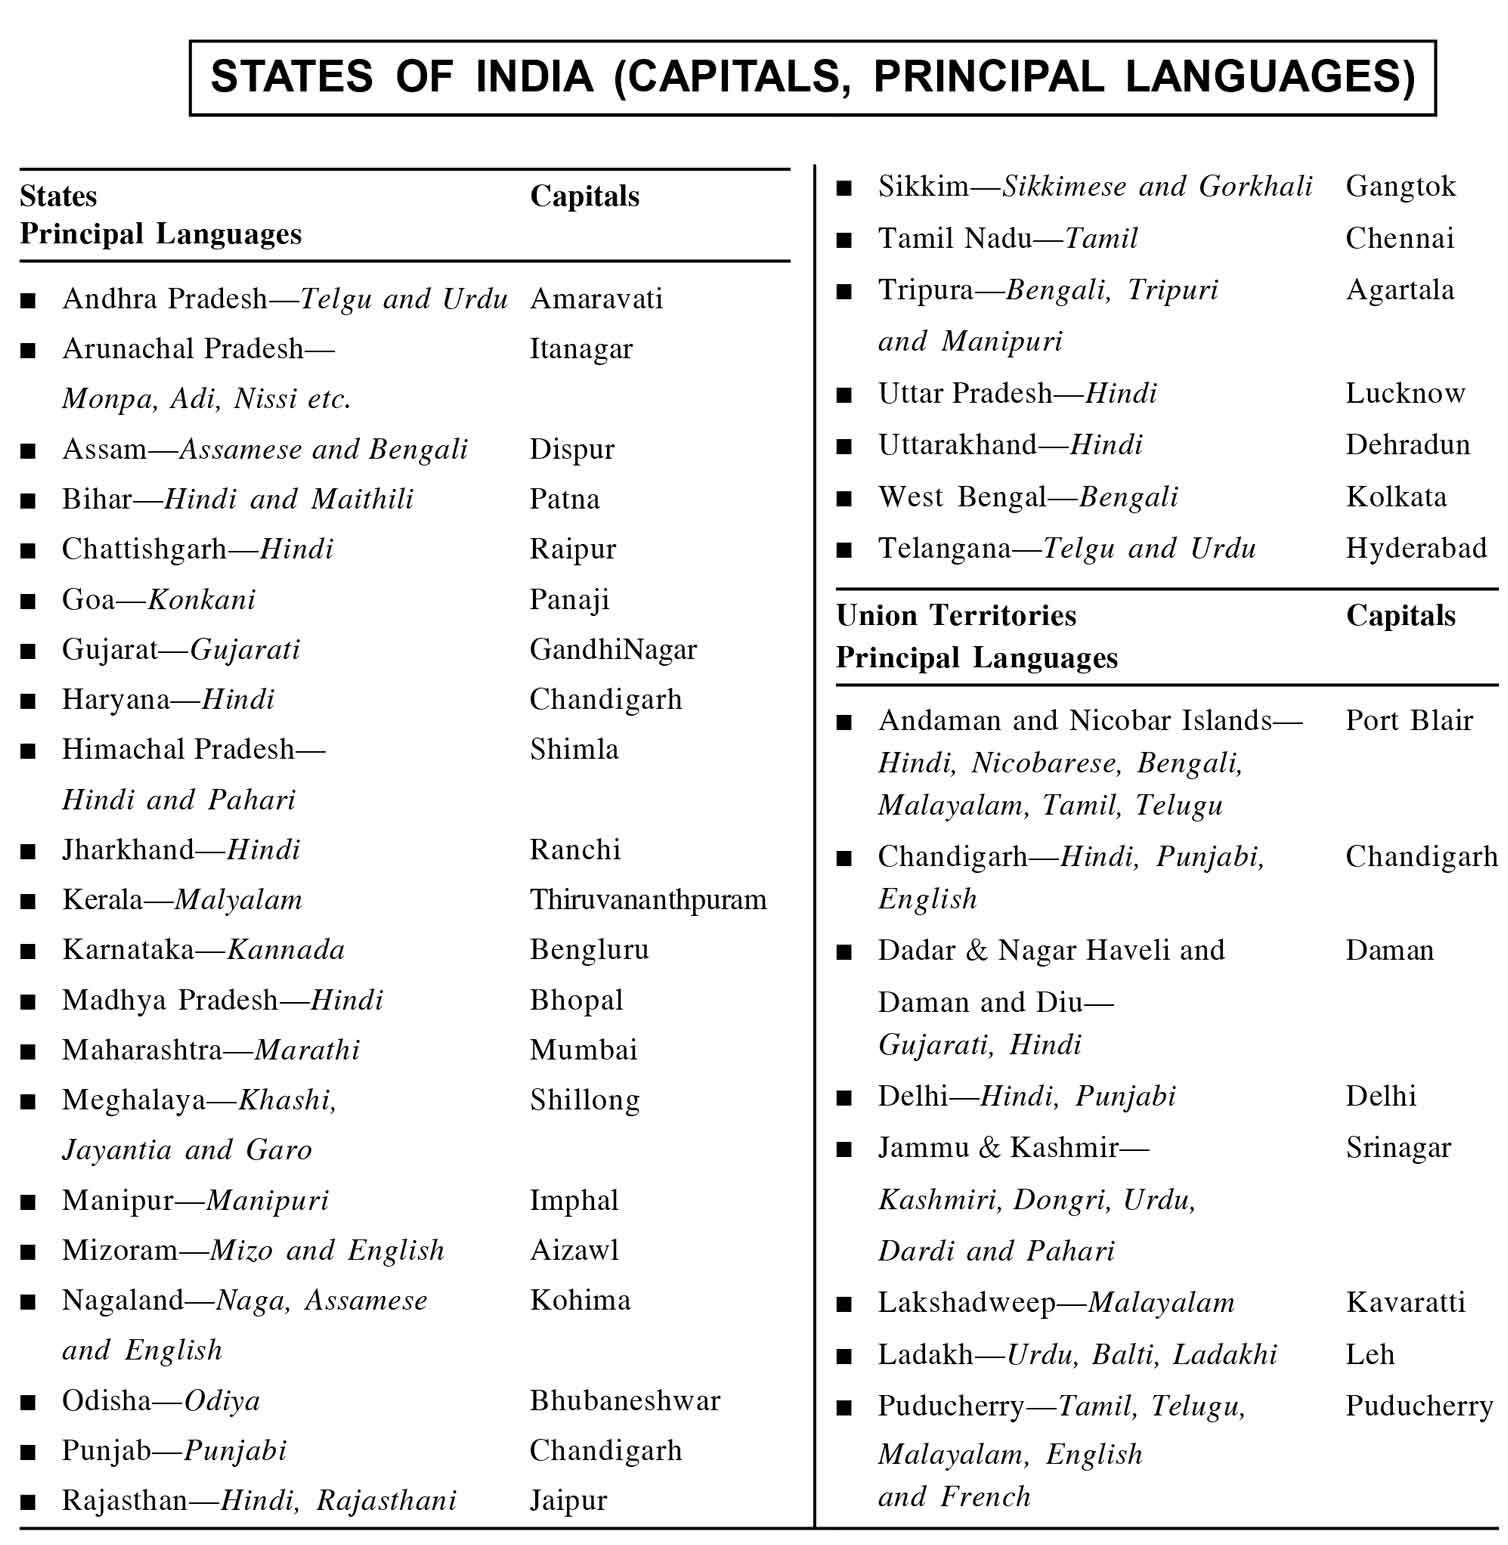 States of India Capitals, Principal Languages